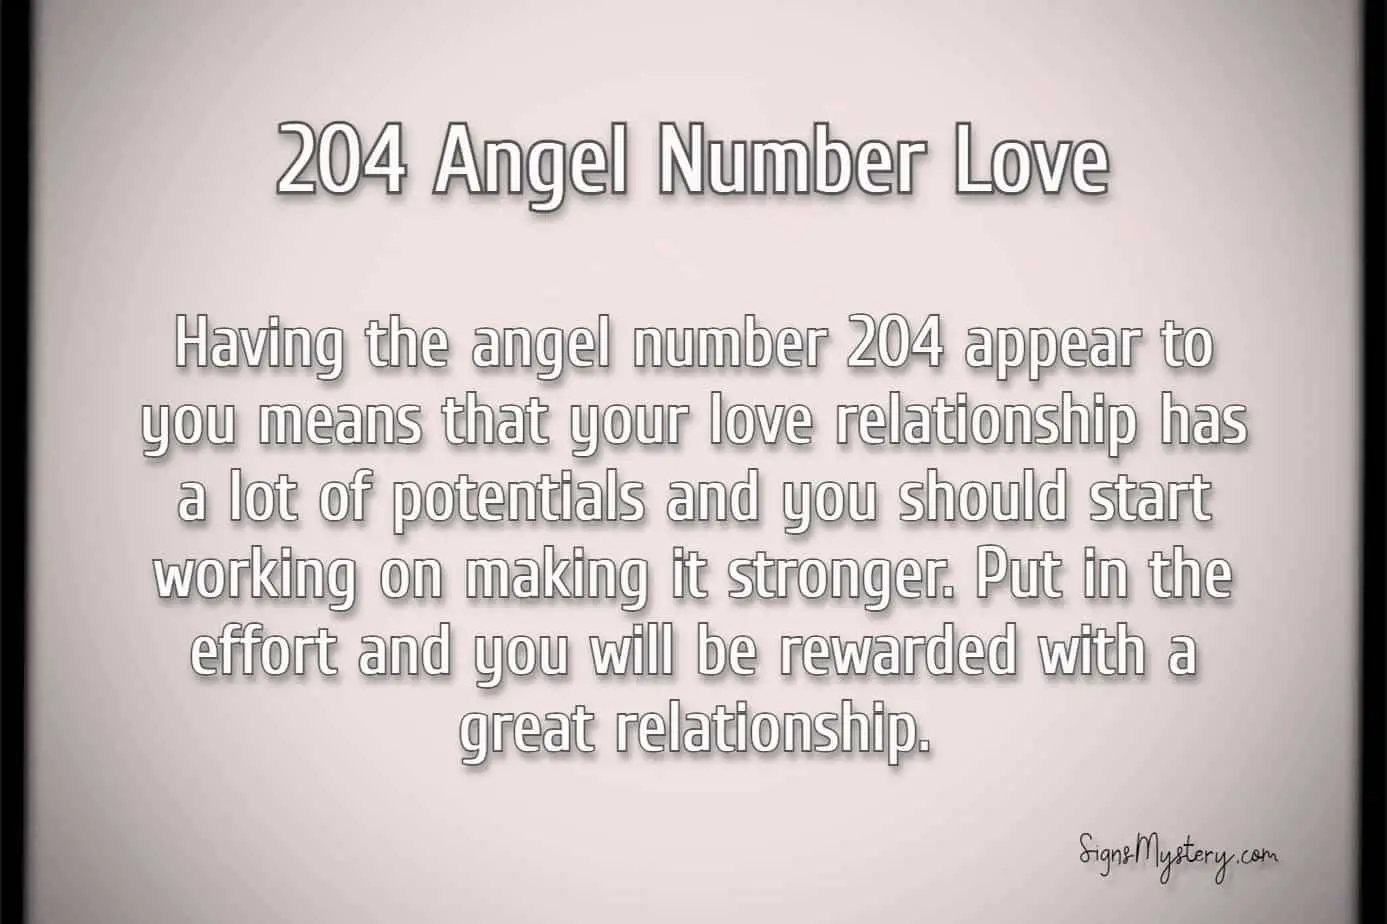 204 angel number love